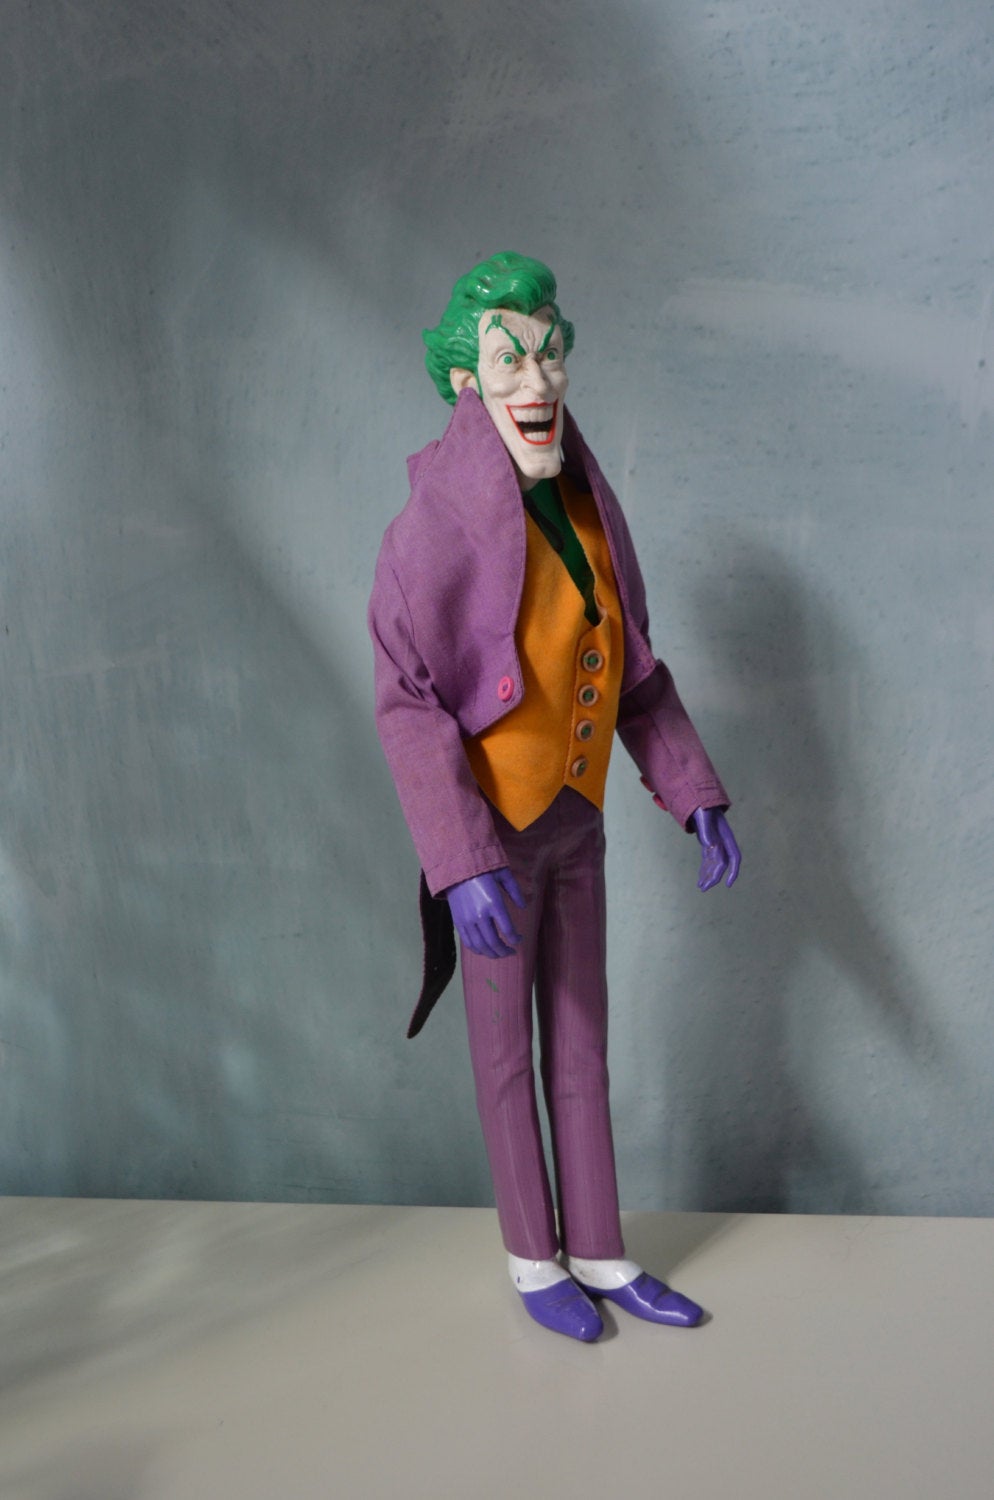 1989 Joker Doll Figurine Vinyl Doll Hamilton Presents Gifts Giant